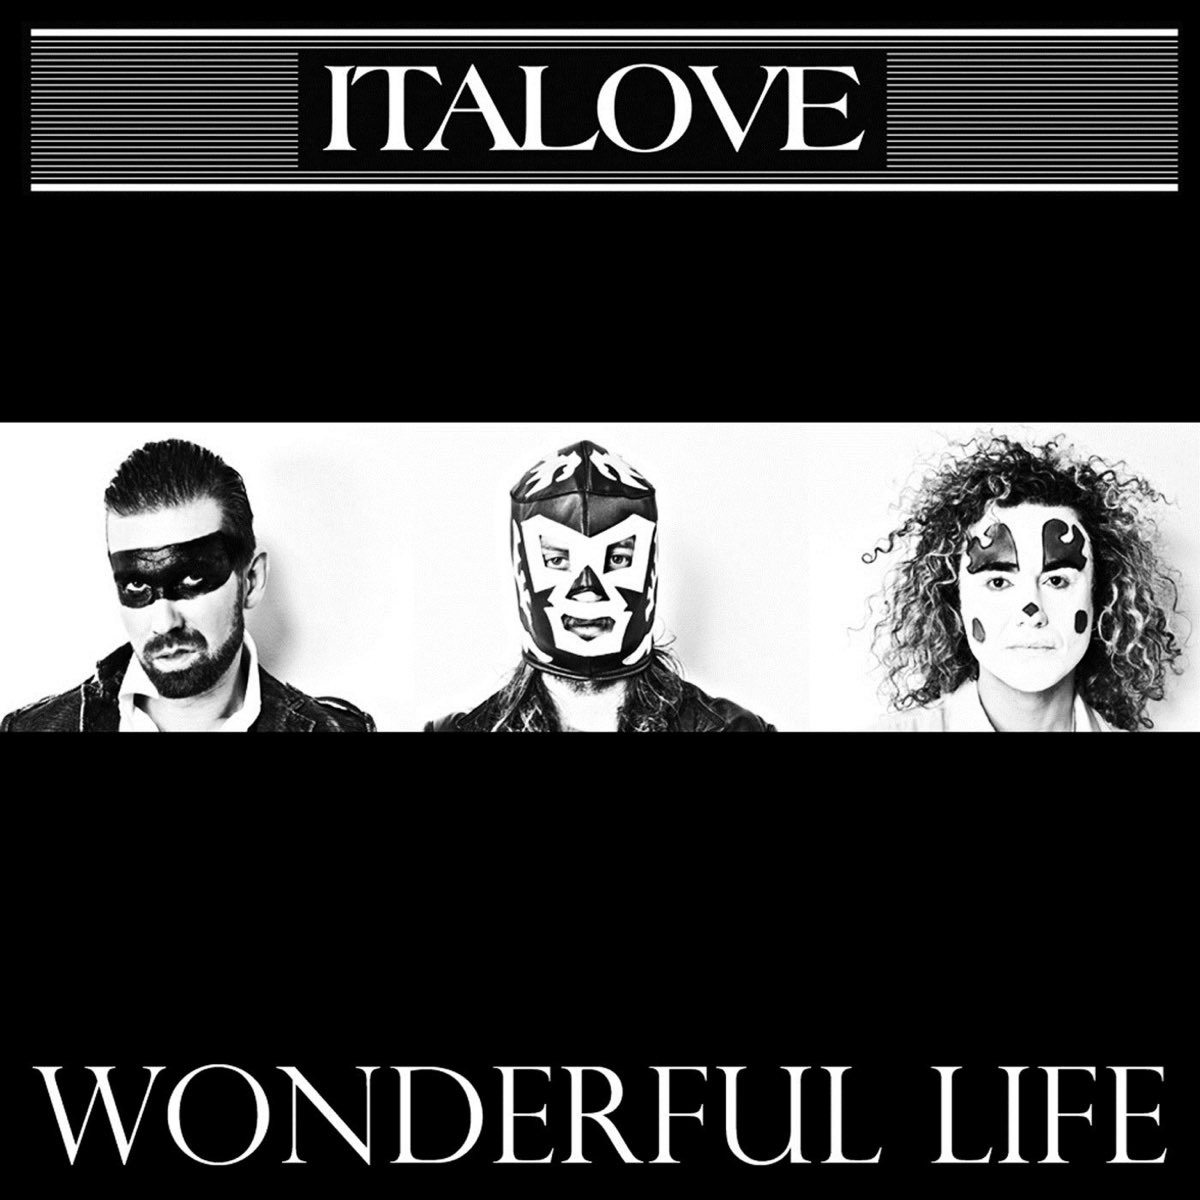 Wonderful life слушать. Italove группа. Вондерфул лайф. Wonderful Life (песня группы Black). TG Italove.